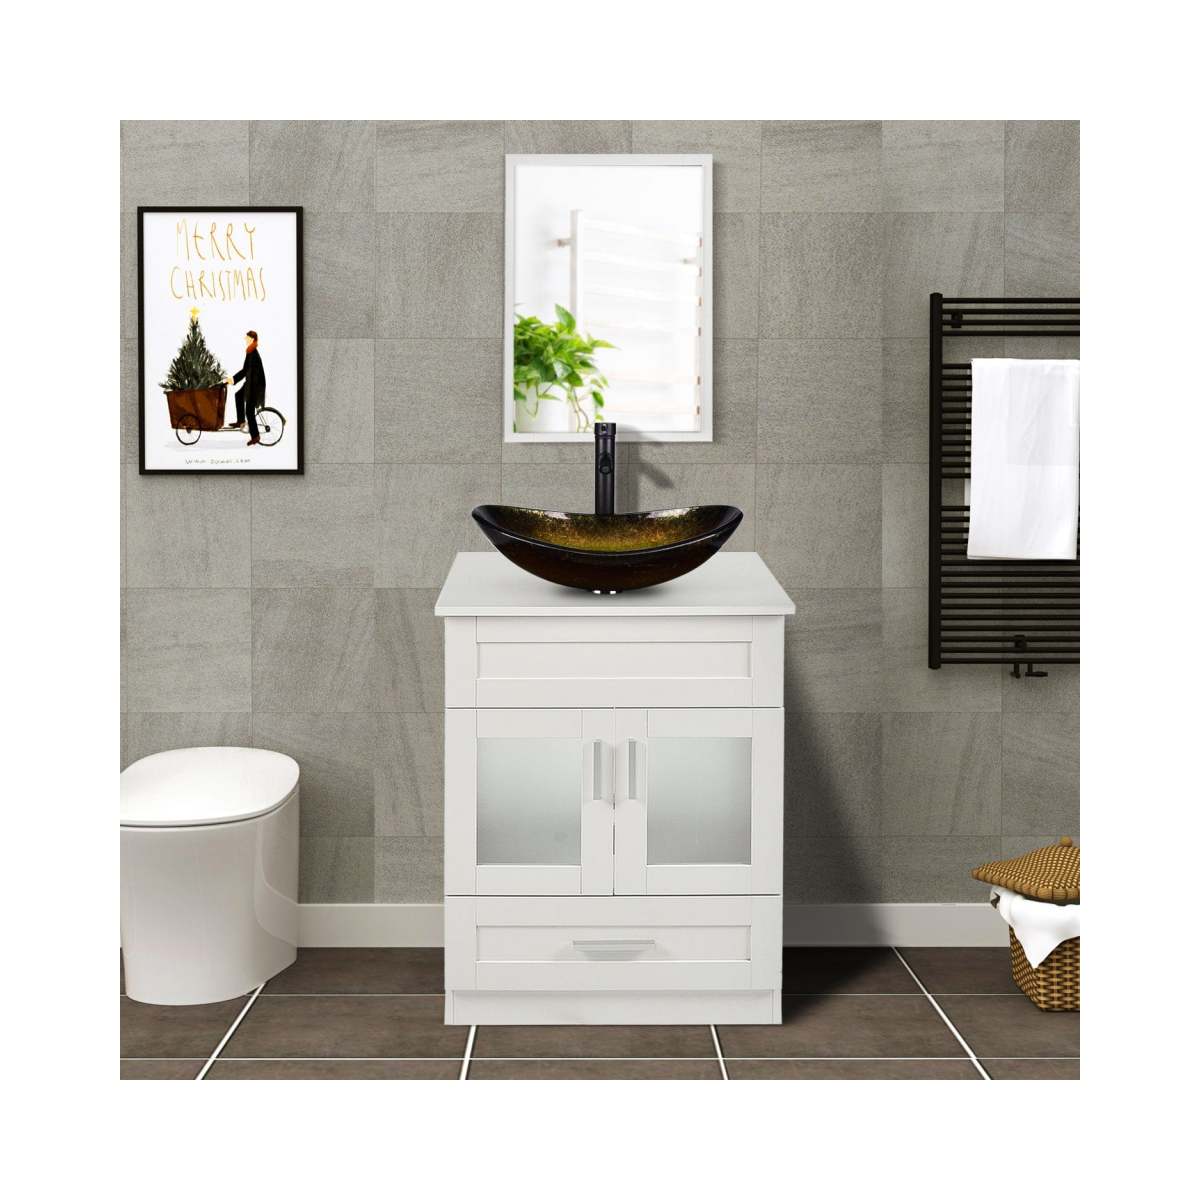 Elecwish White Bathroom Vanity with Gold Boat Sink Set BA1001-WH display scene